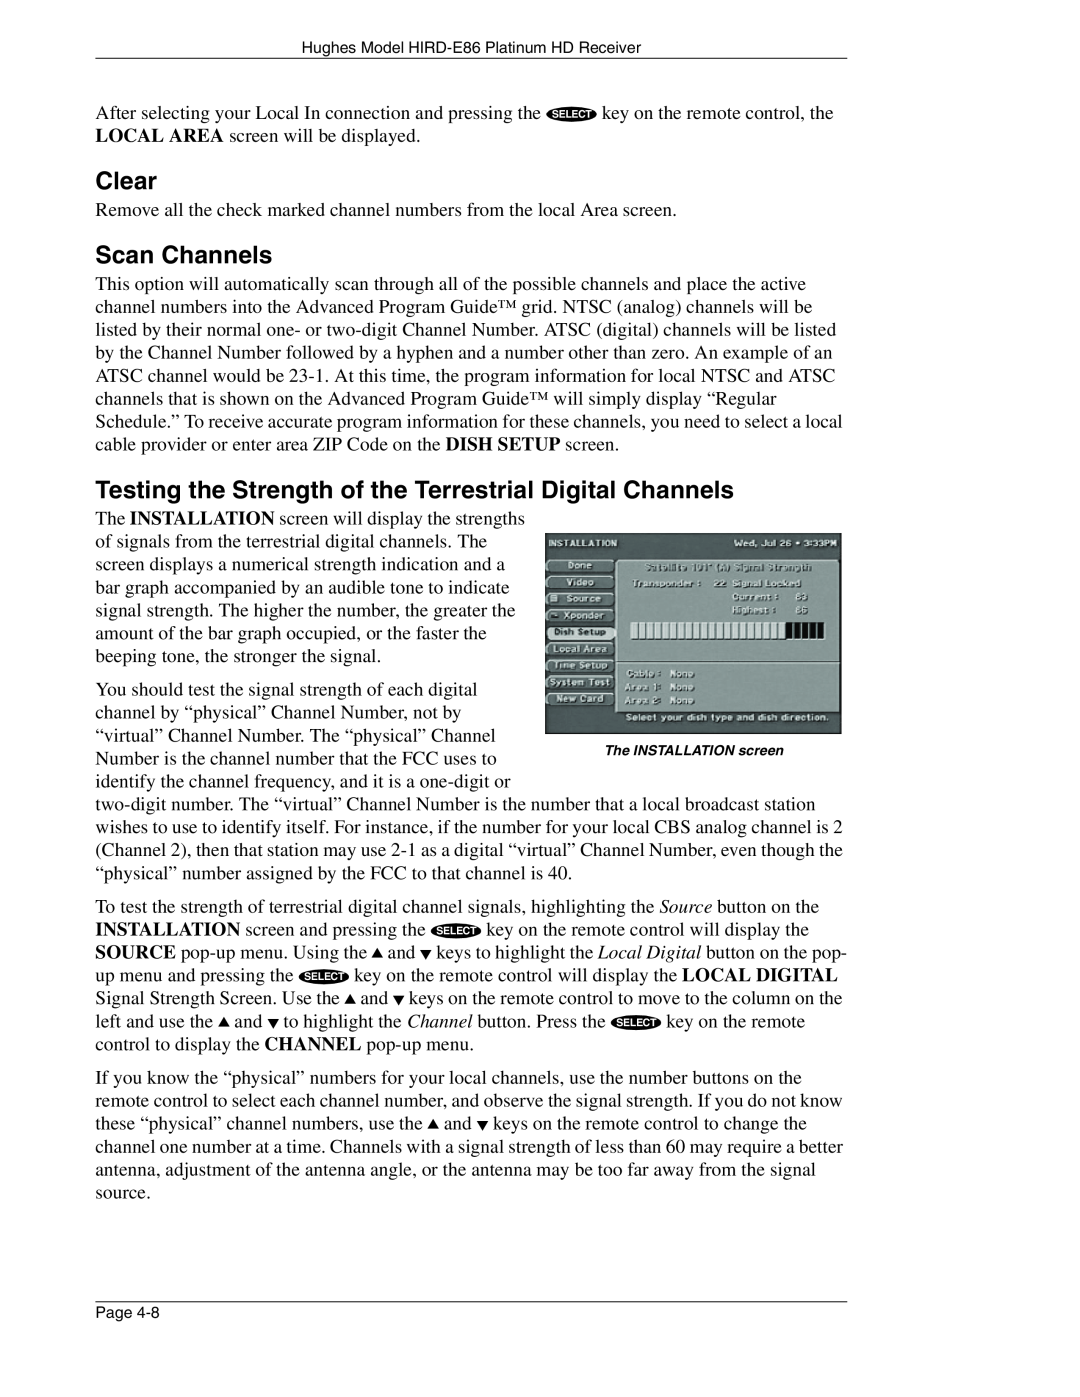 DirecTV HIRD-E86 manual Clear, Scan Channels 